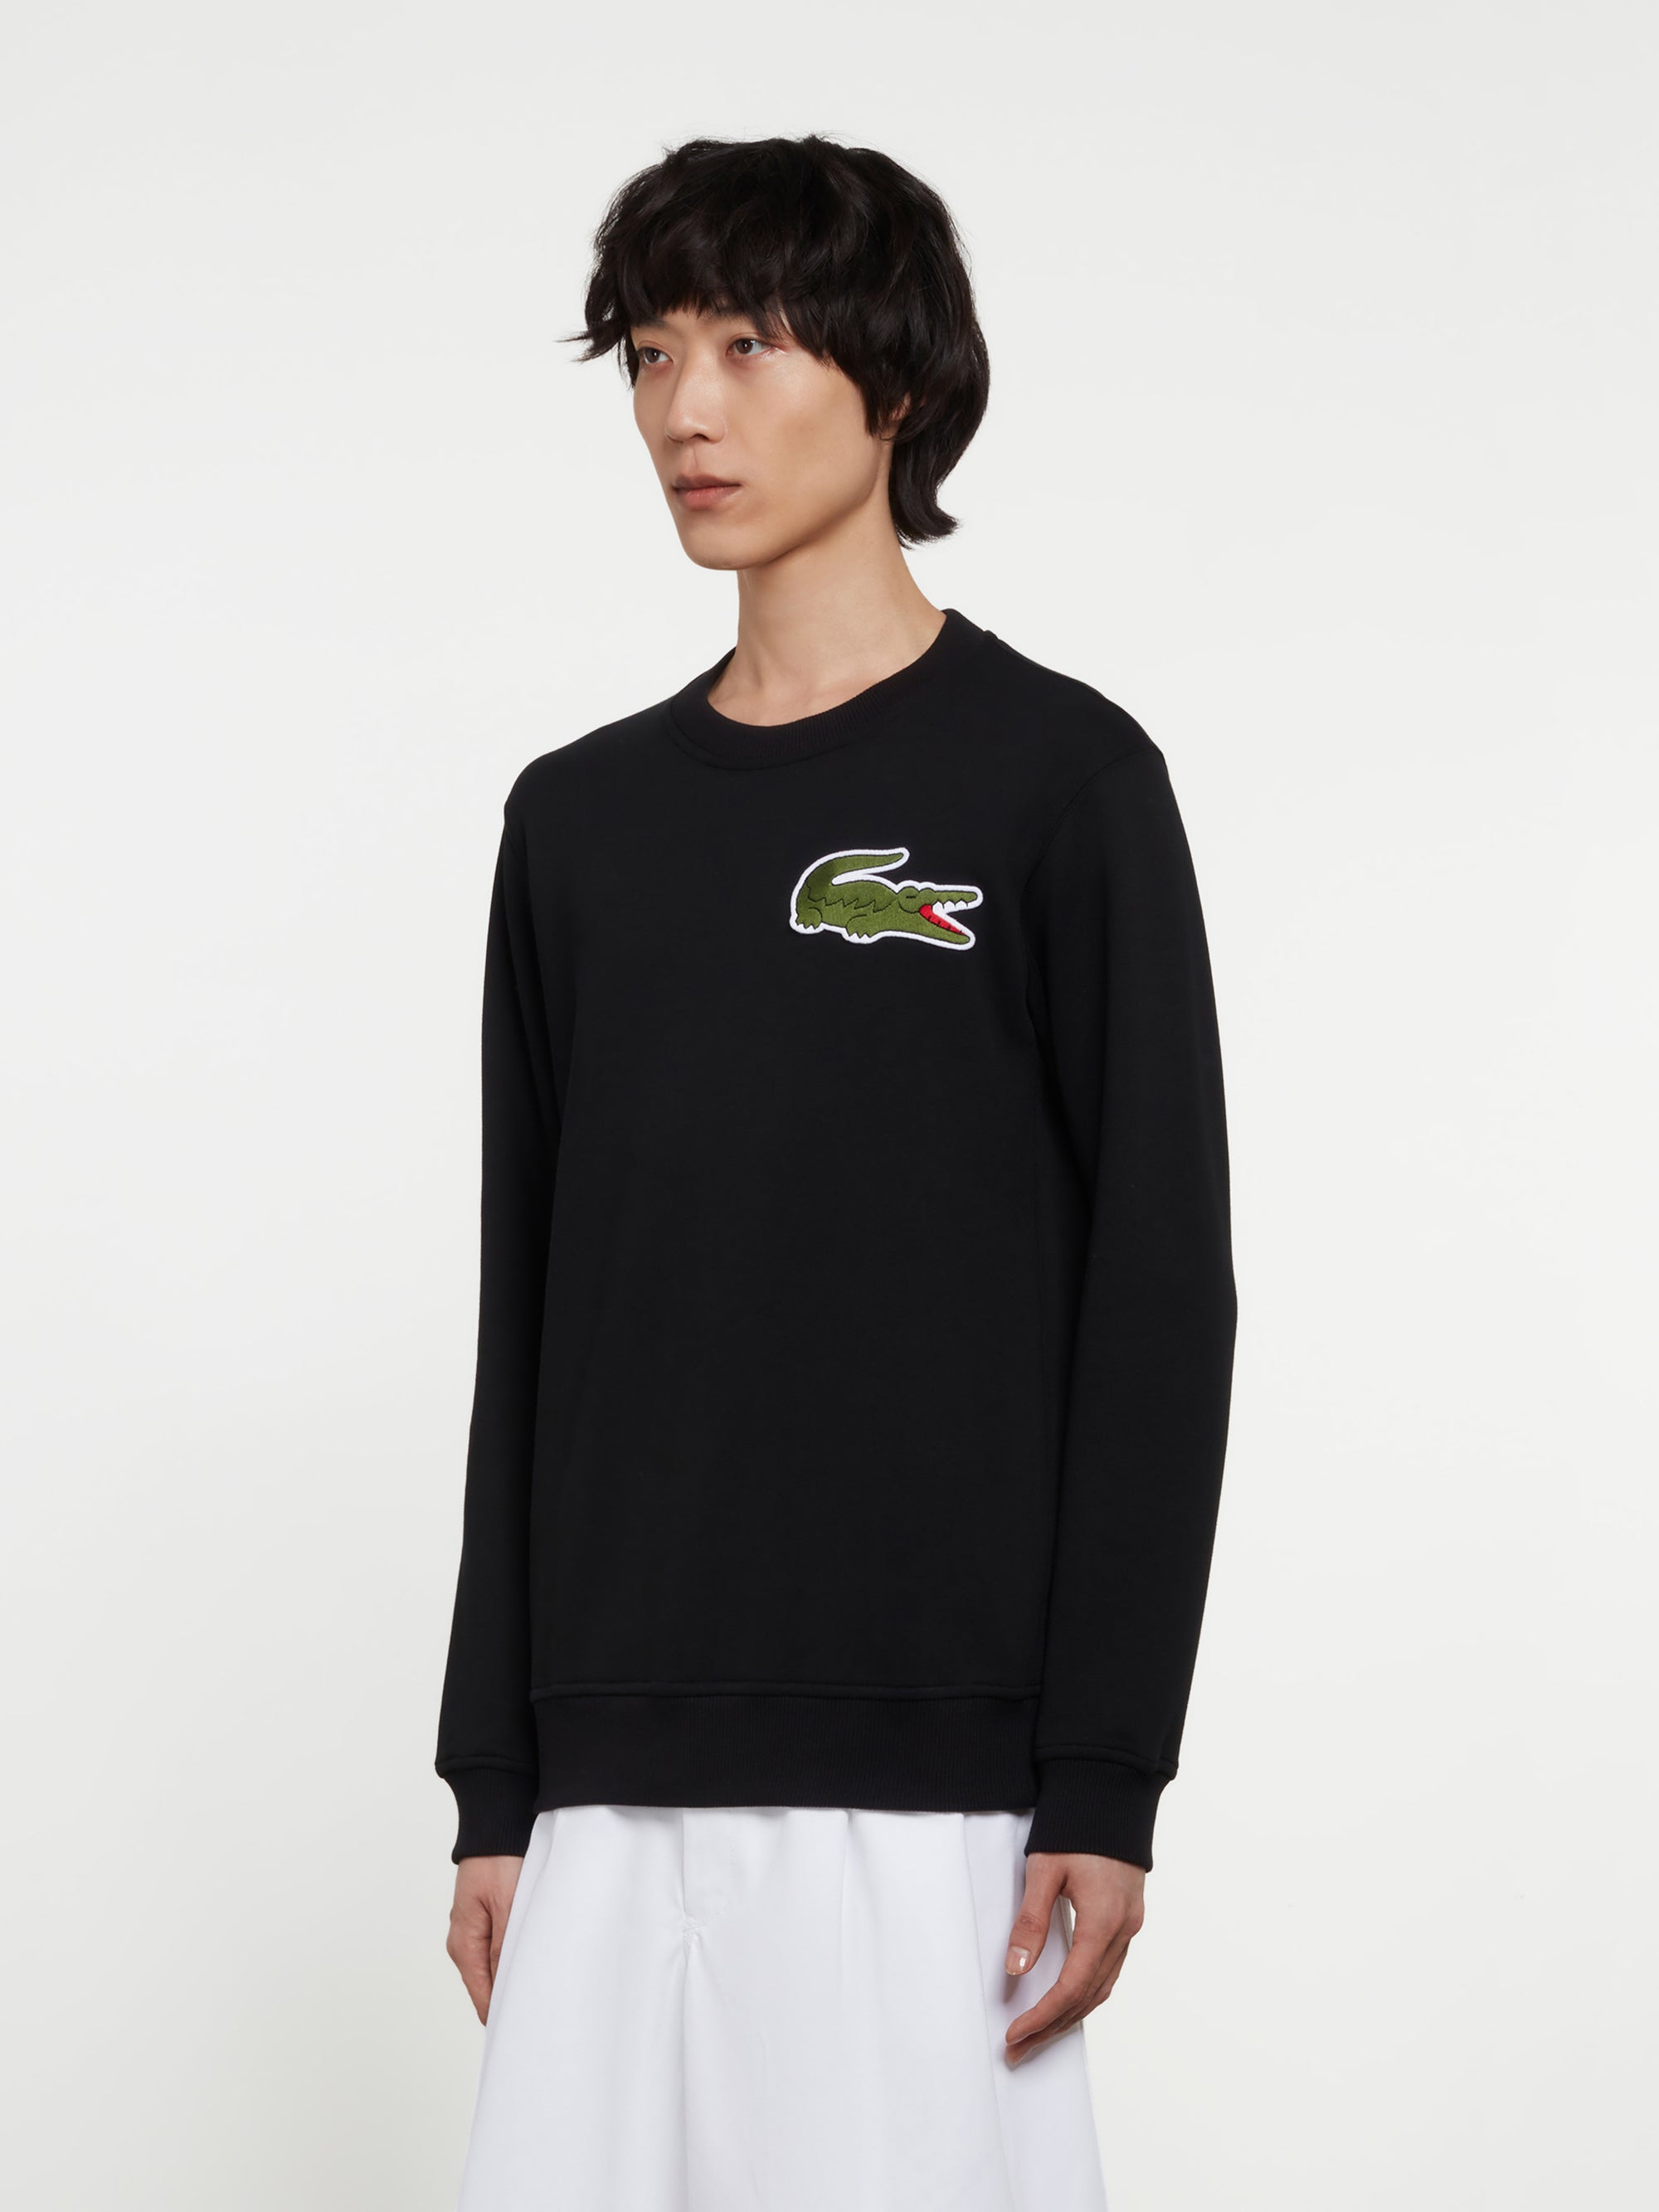 CDG Shirt - Lacoste Men's Cotton Sweatshirt - (Black) view 2